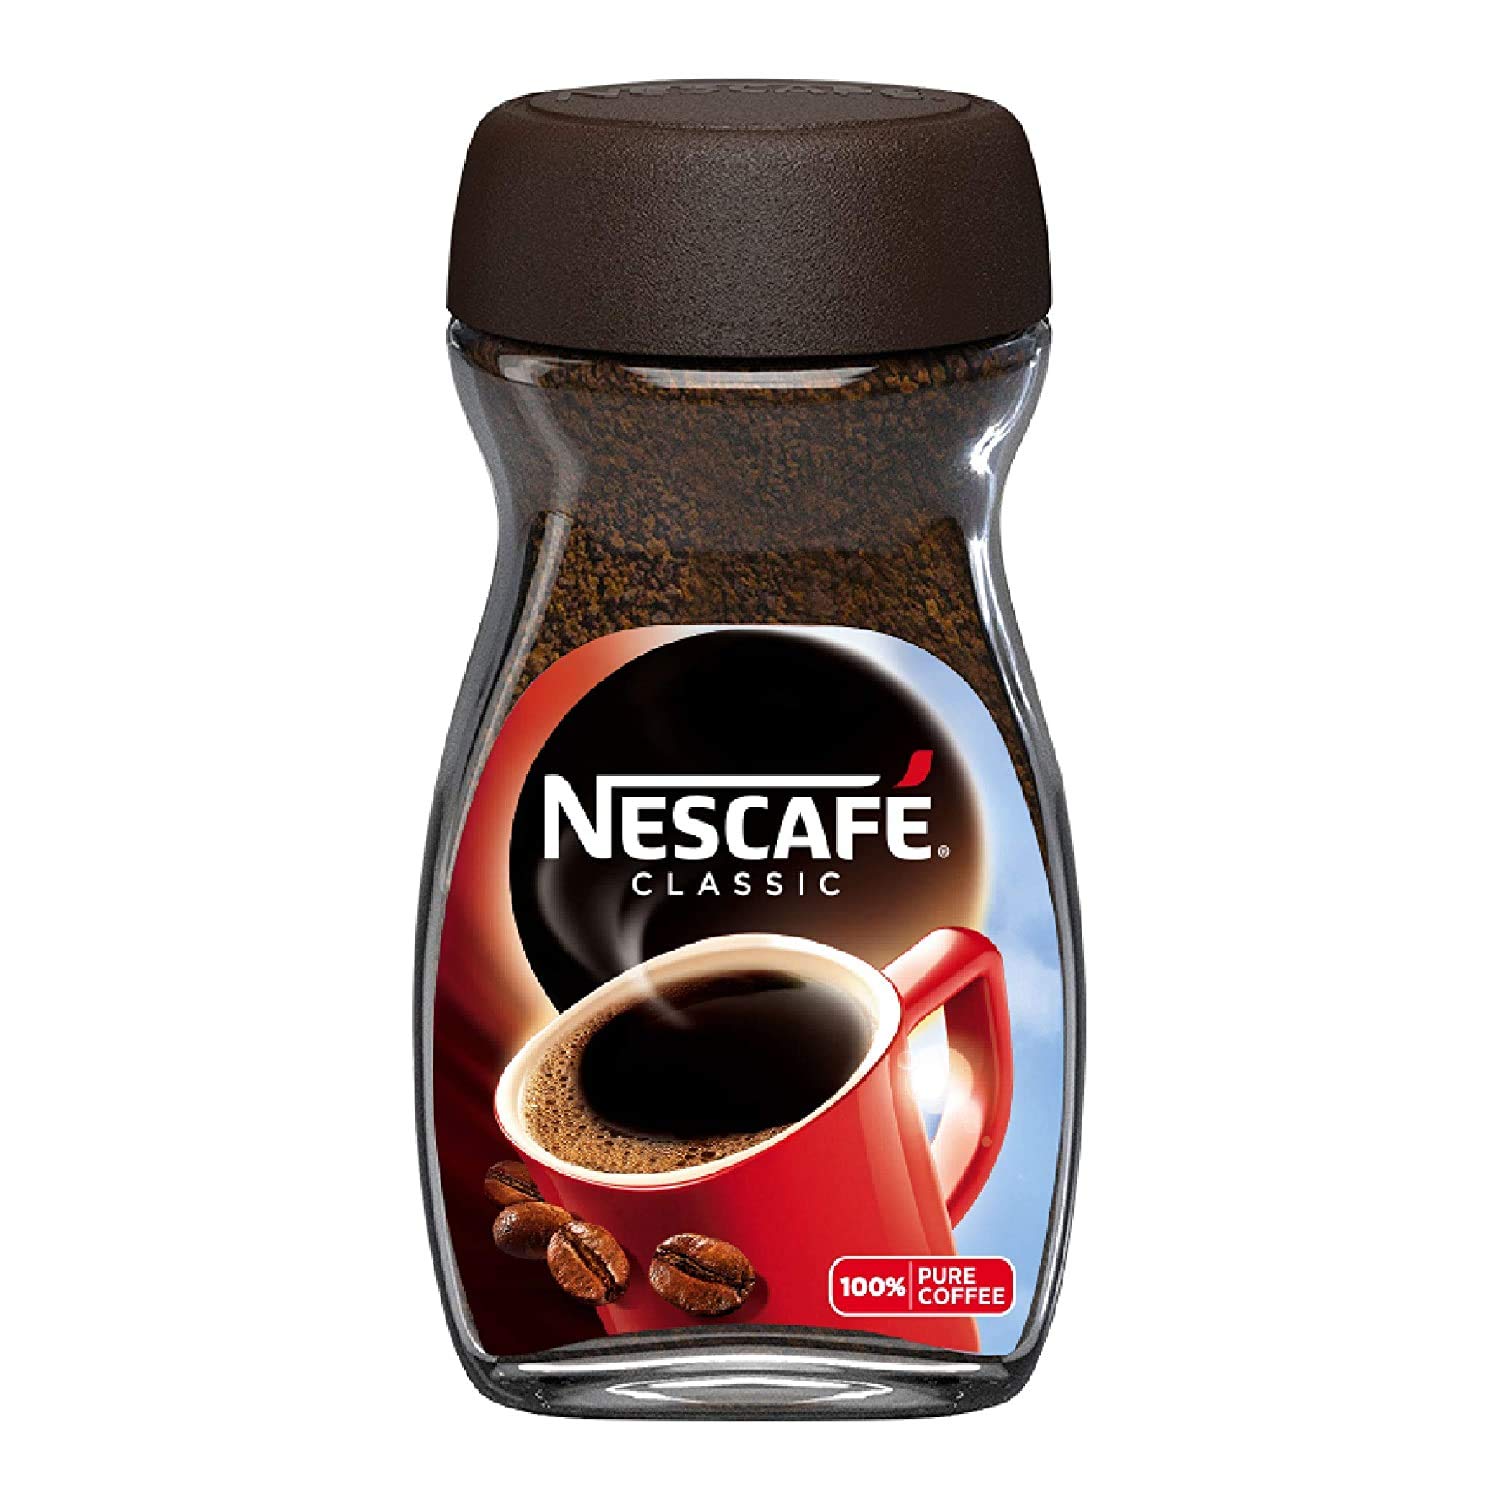 NESCAFE CLASSIC COFFEE BOX MUG SPOON 200 g